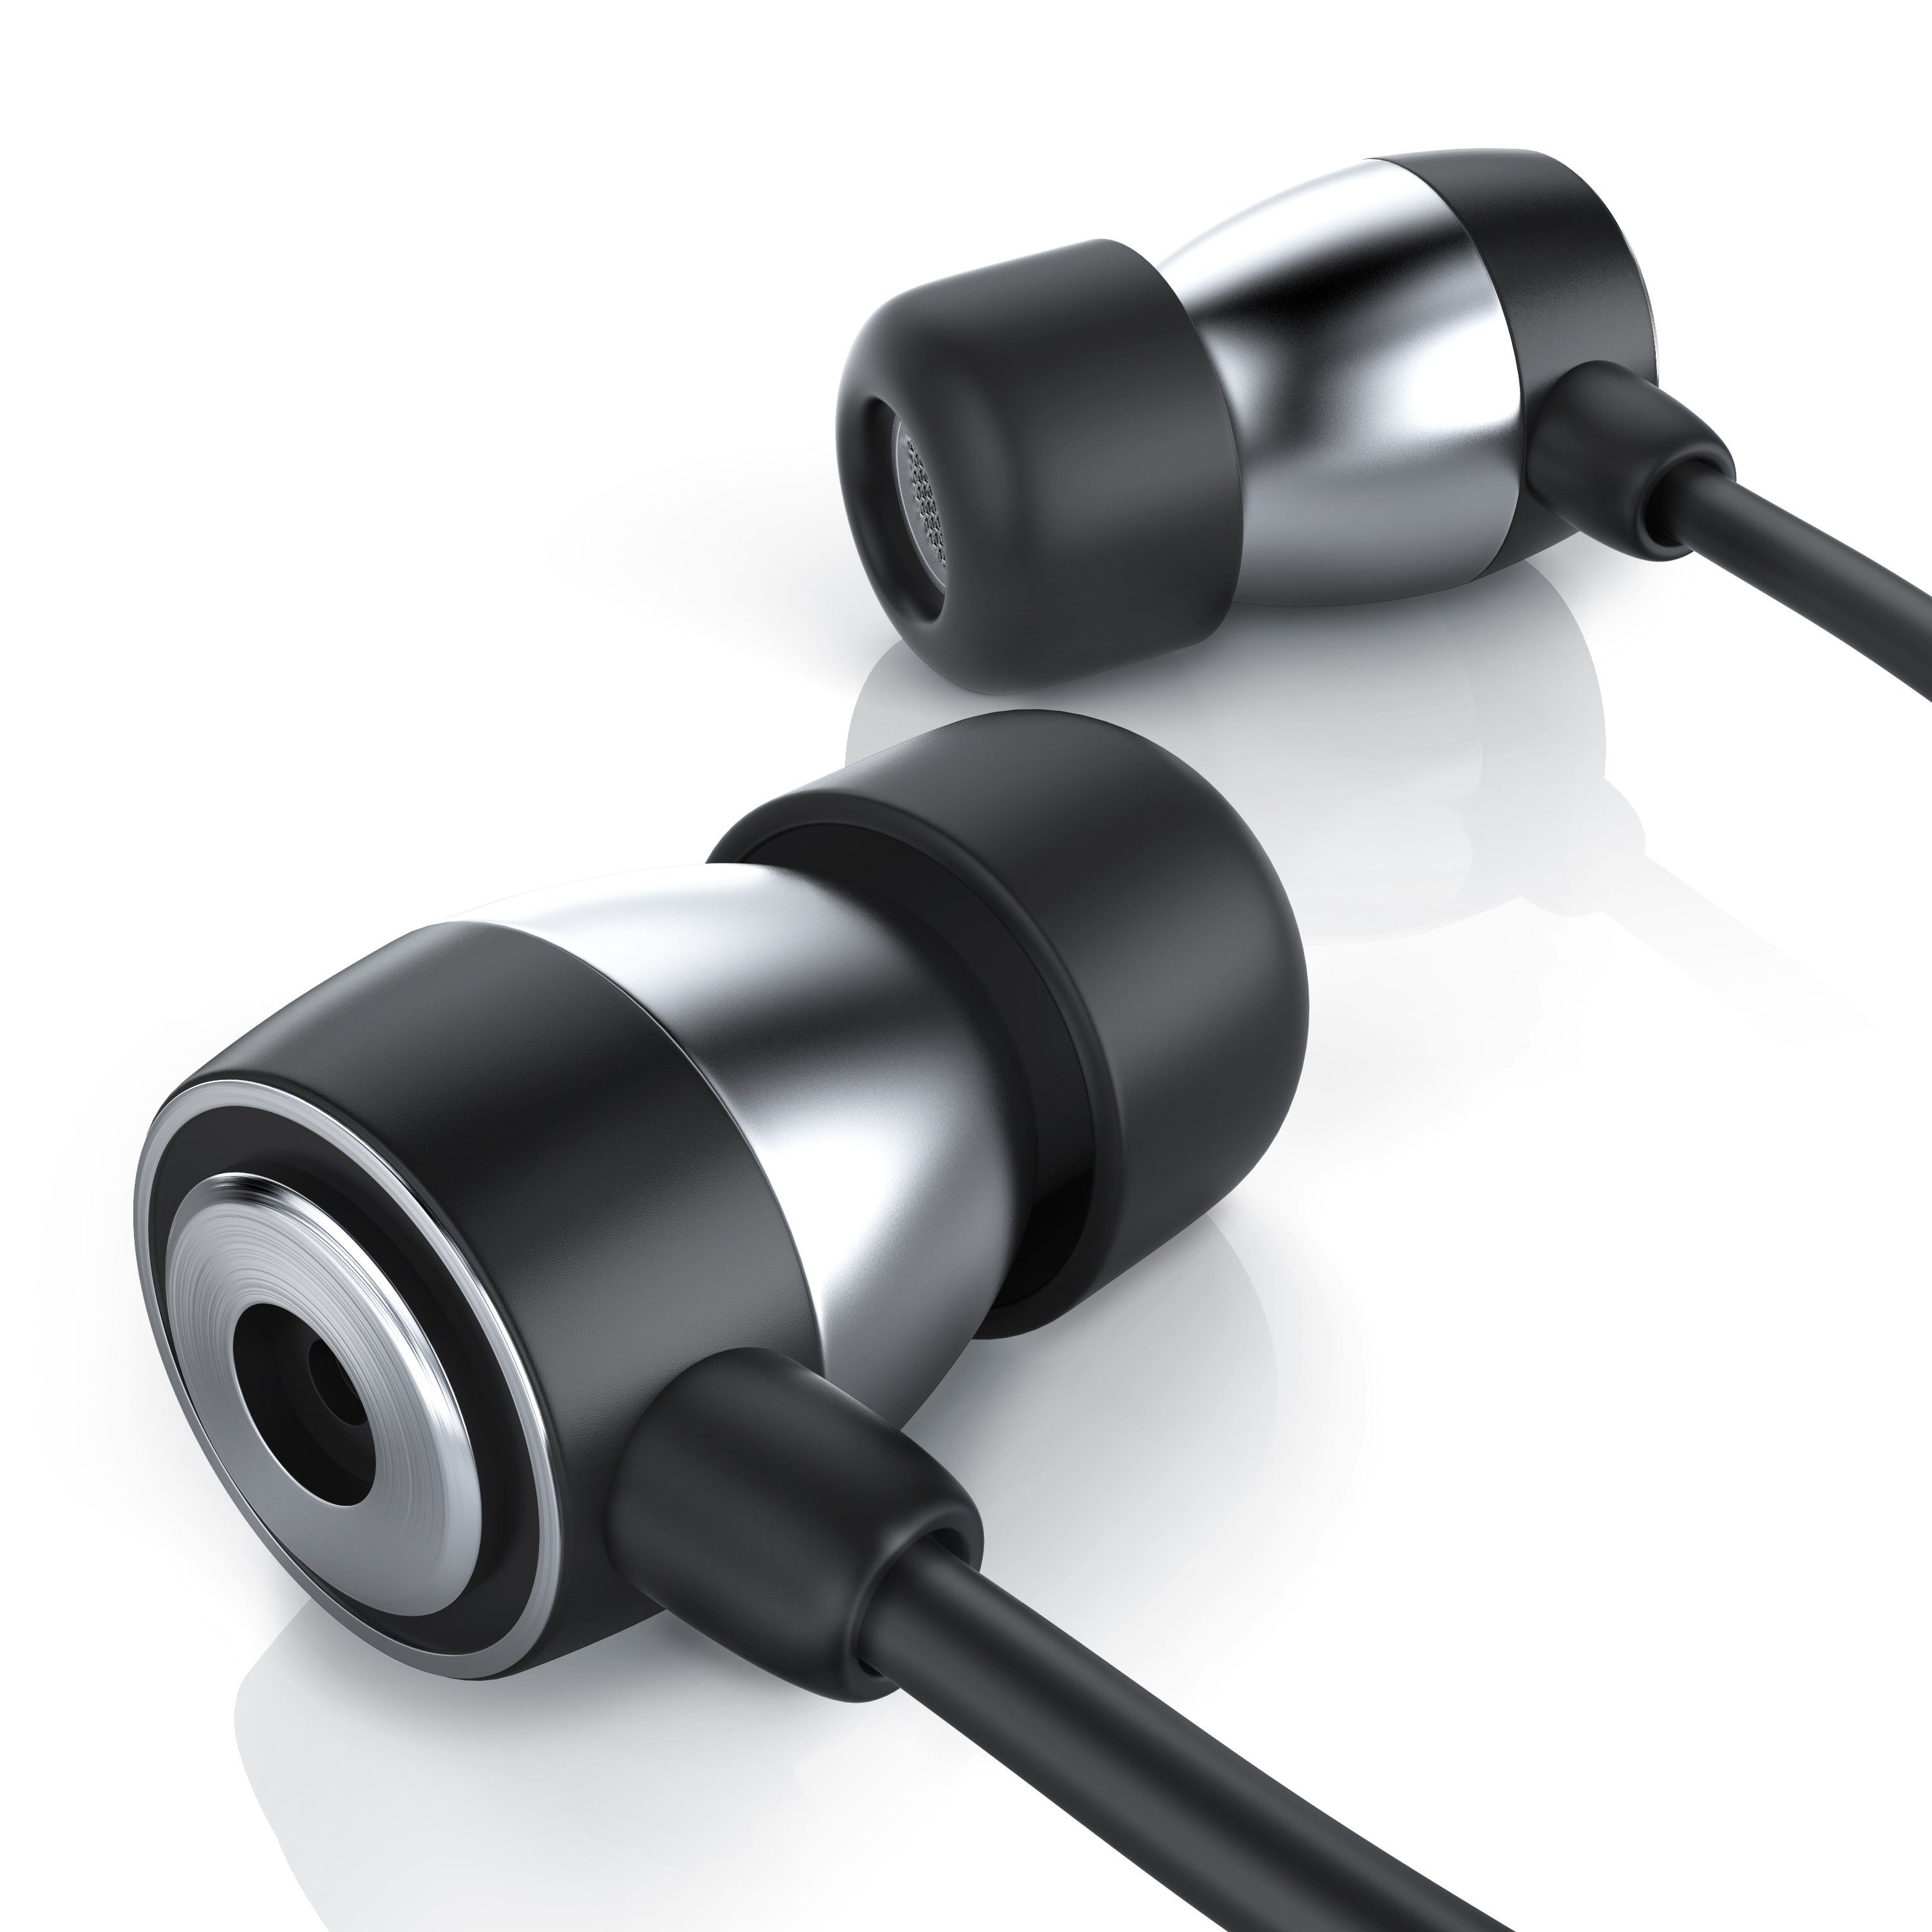 Ohrhöher, Schallwandler, CSL mit Aramid-Kabel In-Ear-Kopfhörer 10mm (InEar Knickschutz)